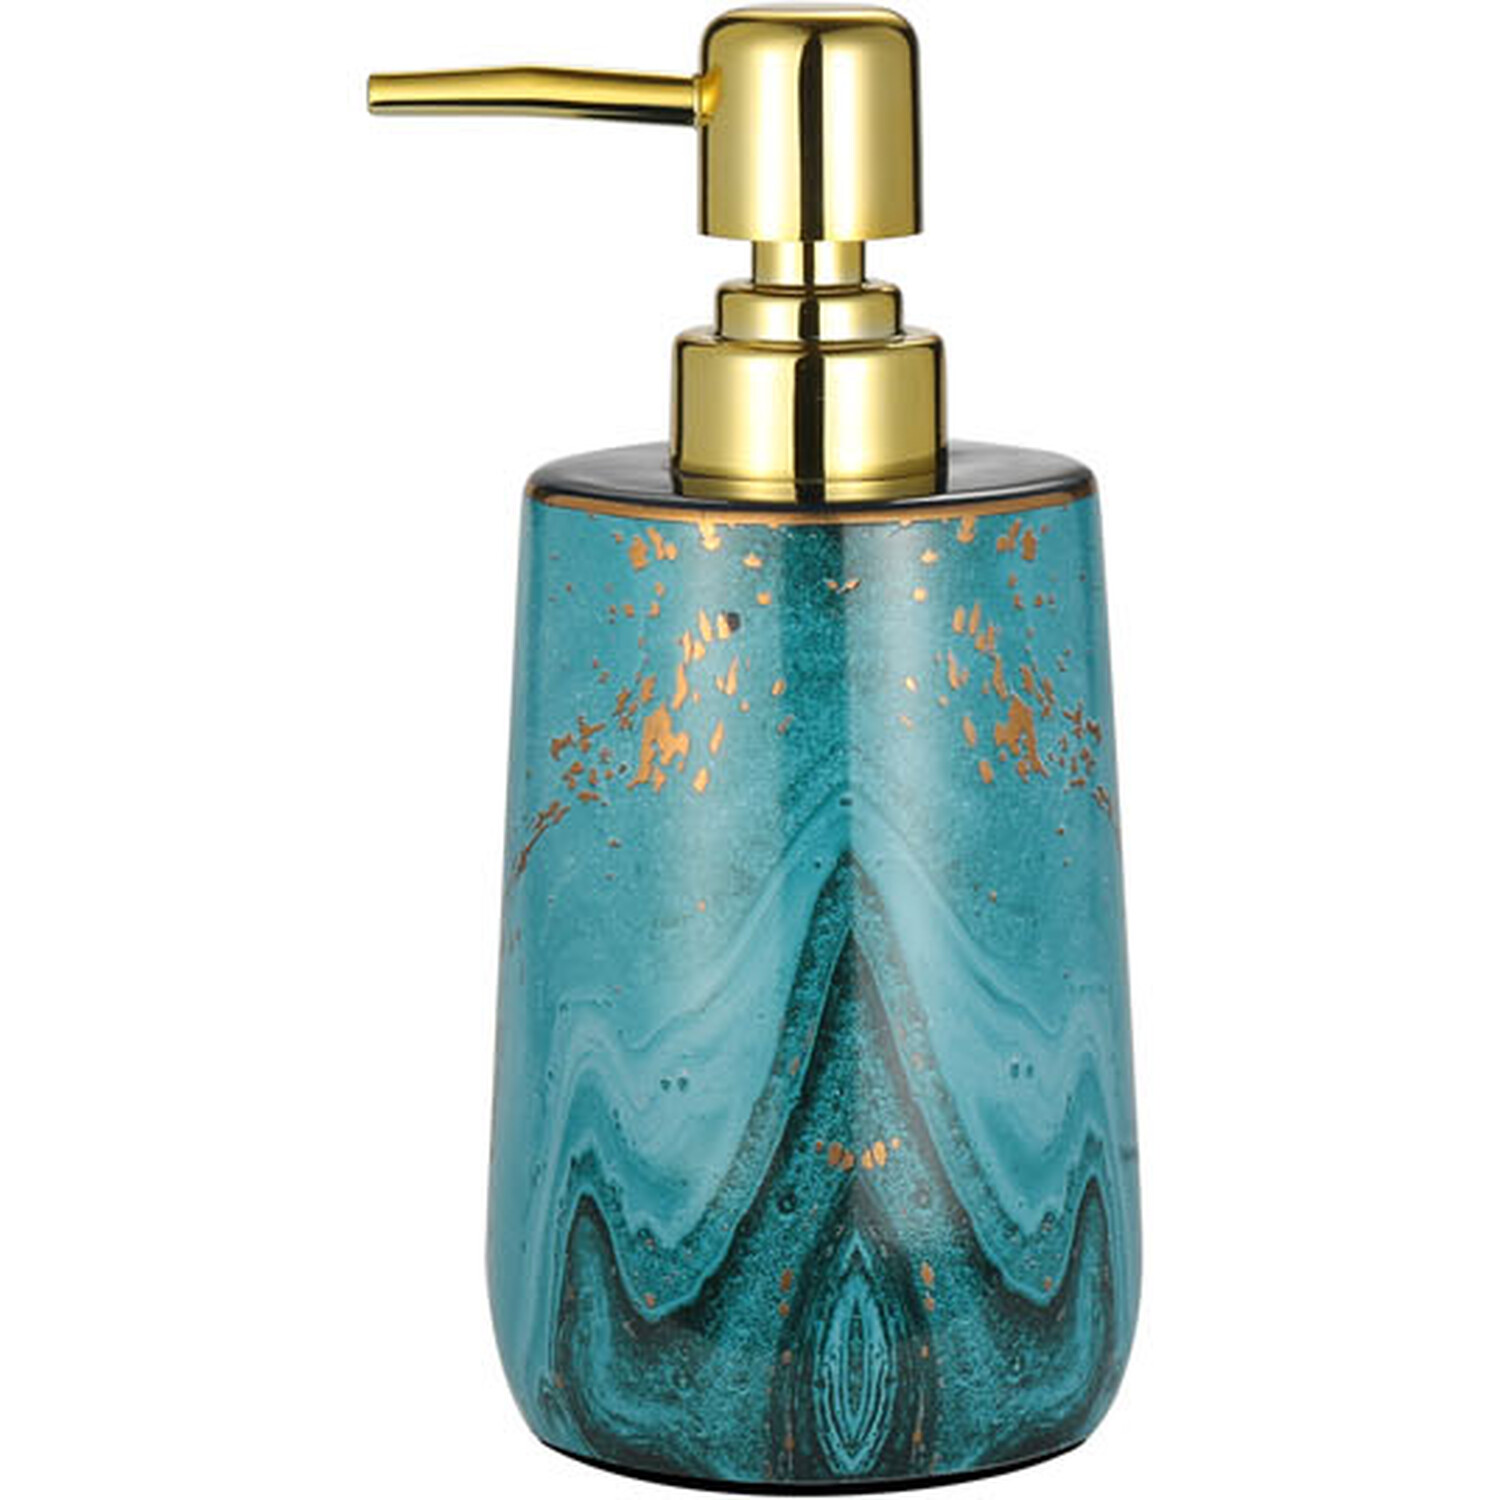 Agate Soap Dispenser - Turquoise Image 1